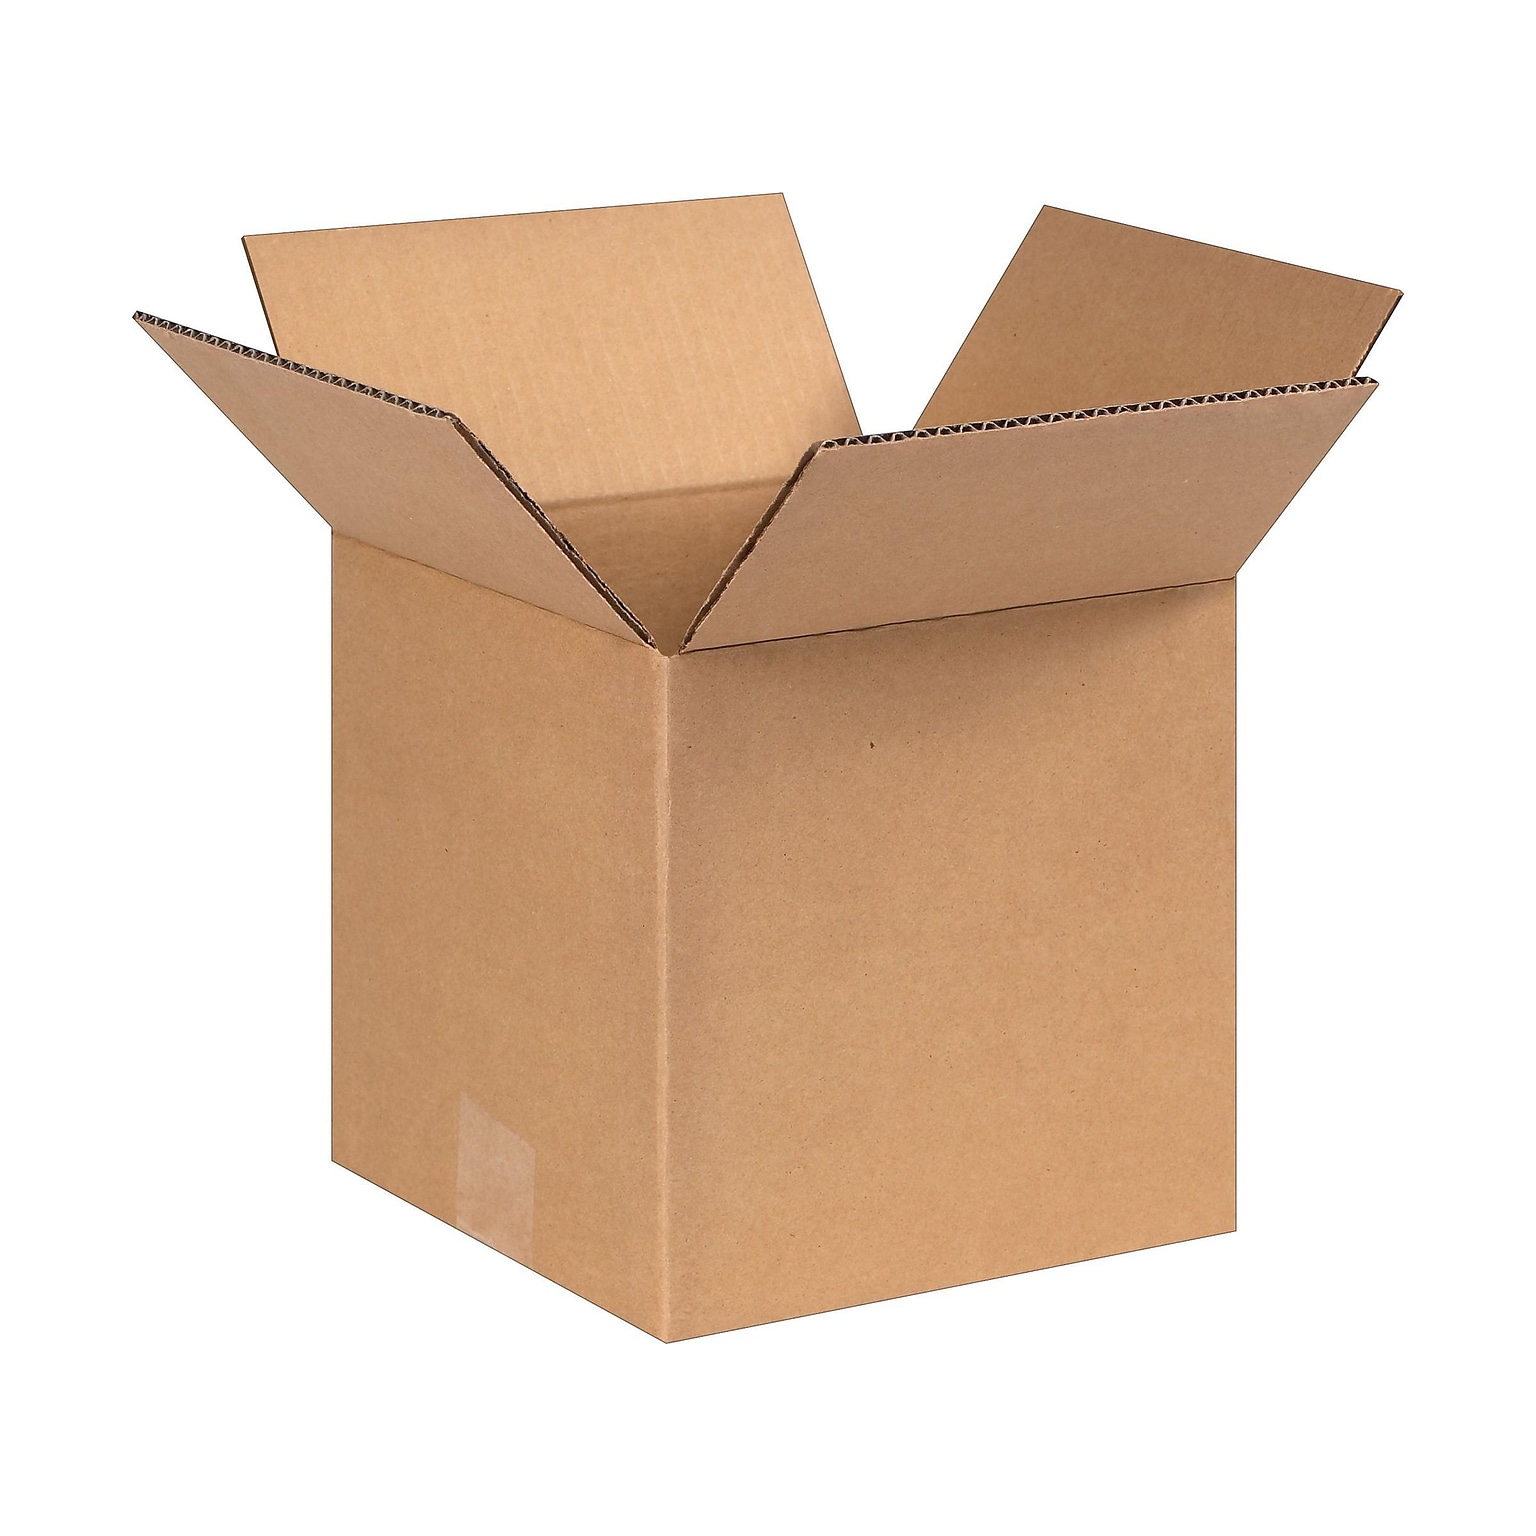 8 x 8 x 8, 32 ECT, Shipping Boxes, 25/Bundle (CW57260)